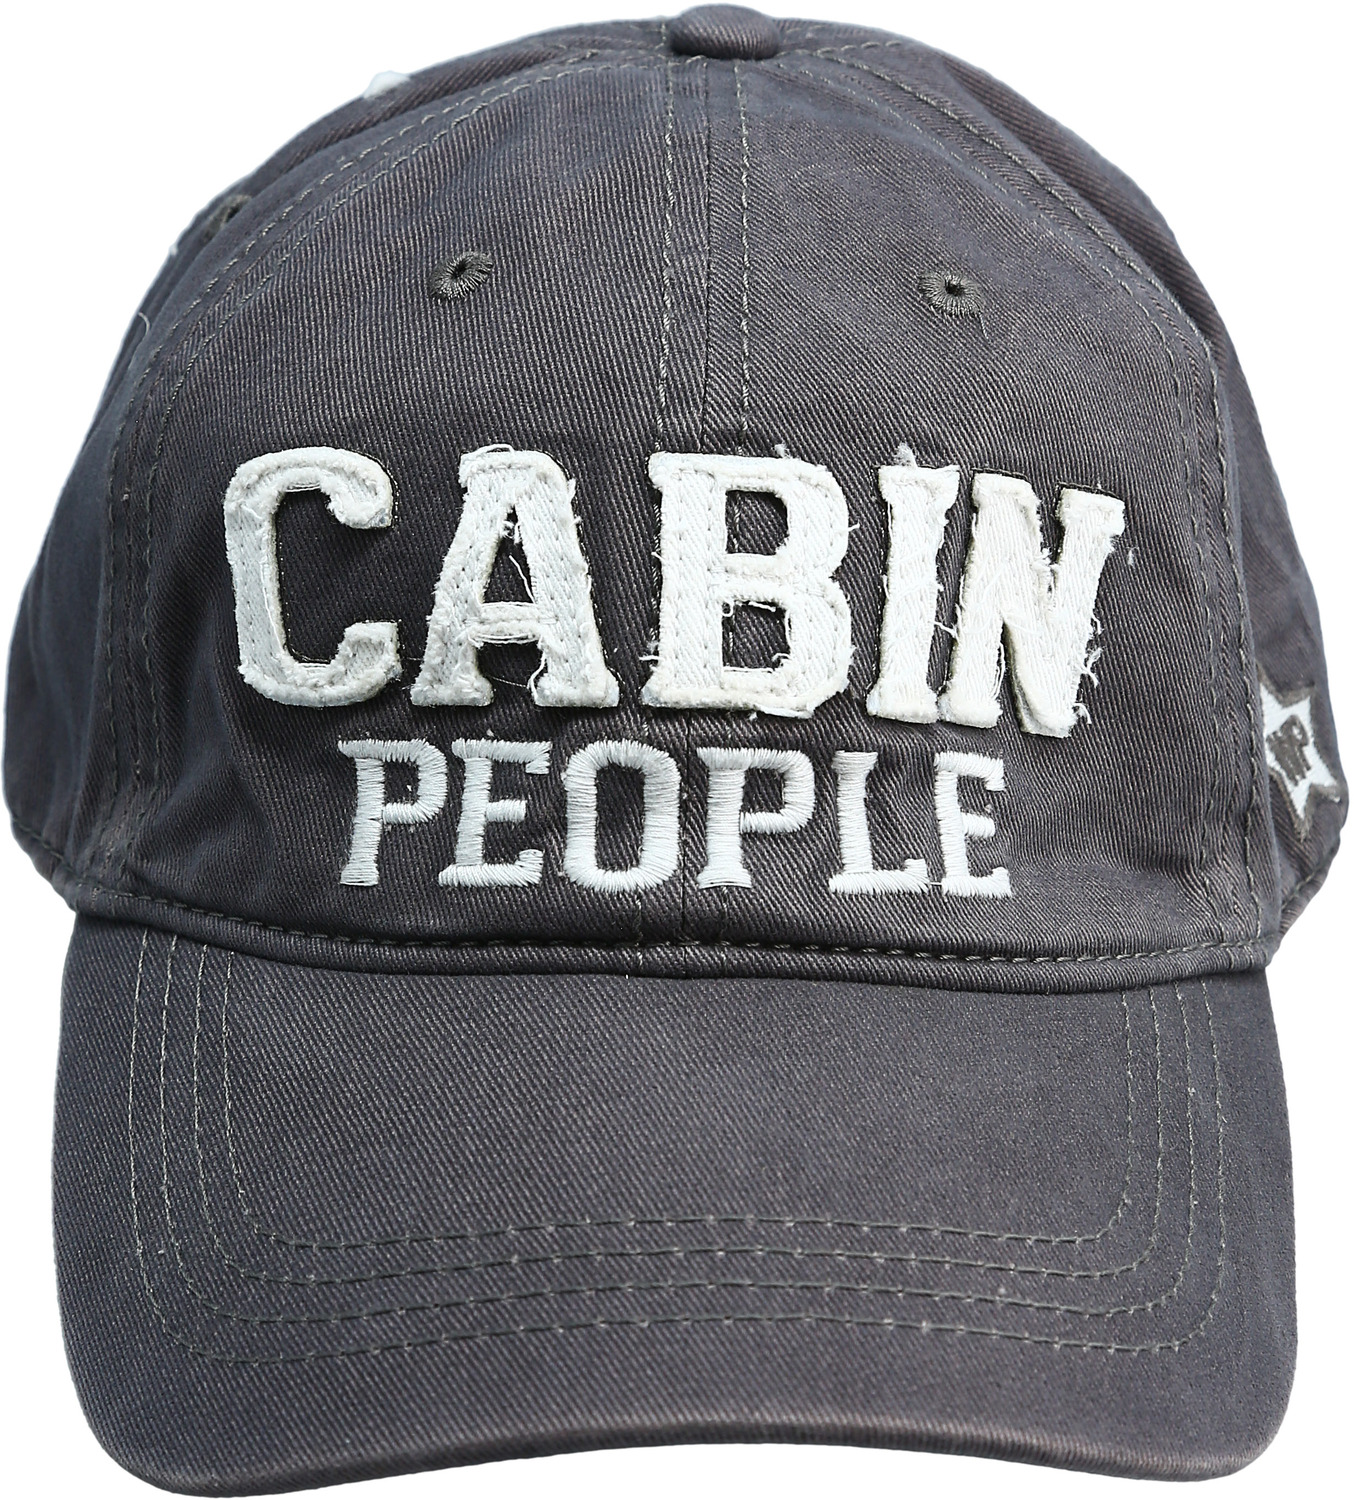 Cabin People by We People - Cabin People - Dark Gray Adjustable Hat